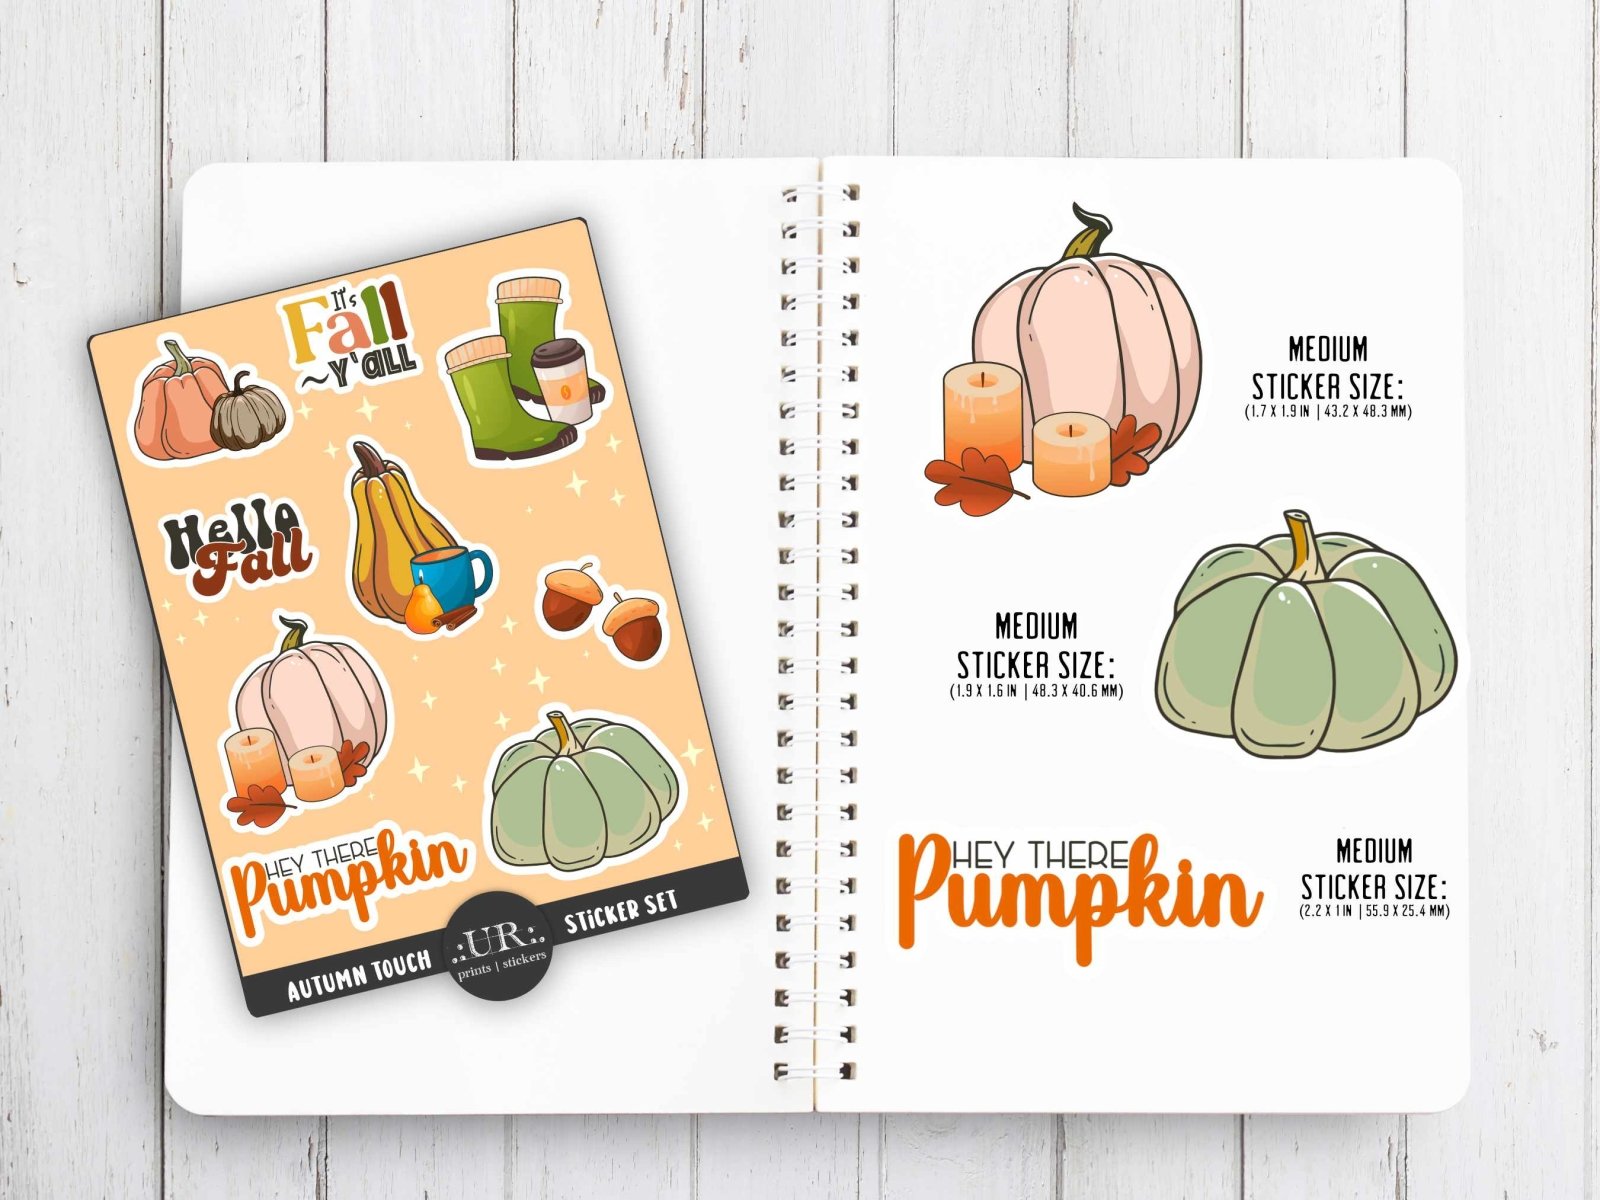 Autumn Touch Sticker Sheet - Stickers - UpperRoomPrints